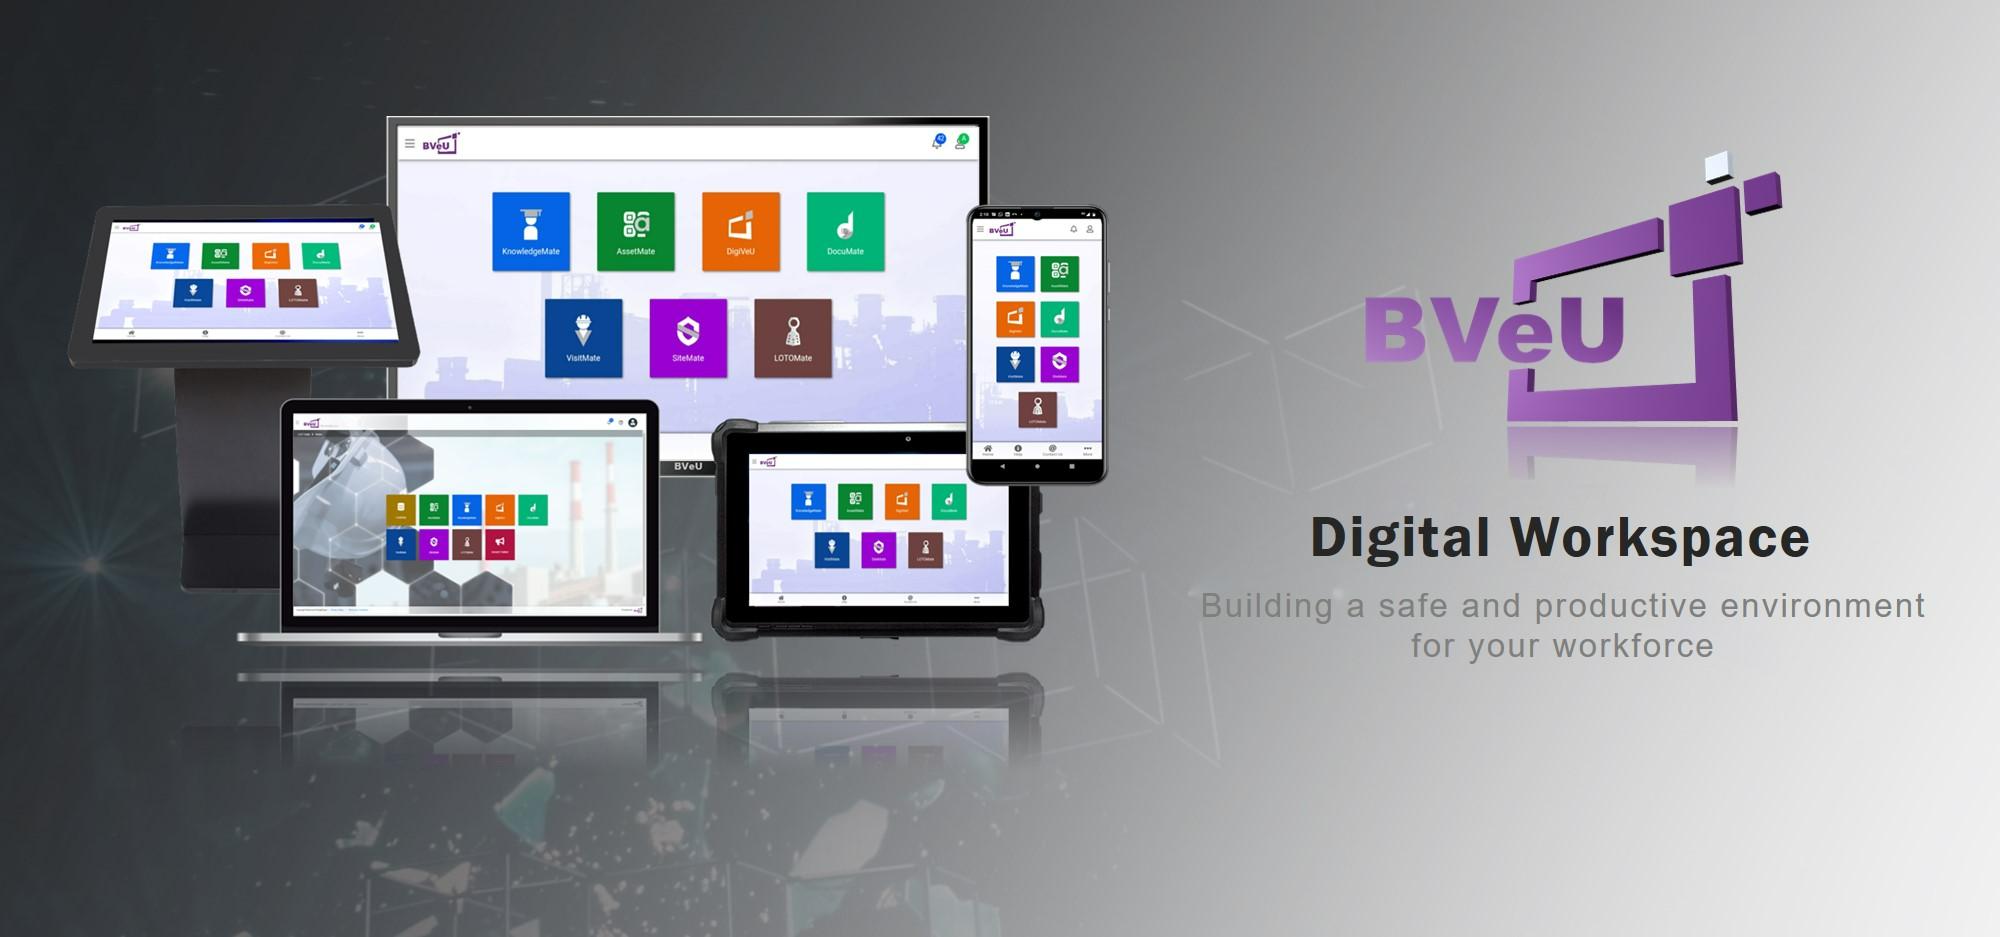 Brigs Digital Workplace banner, BVeU app displaying on digital signage, computer, tablet and mobile